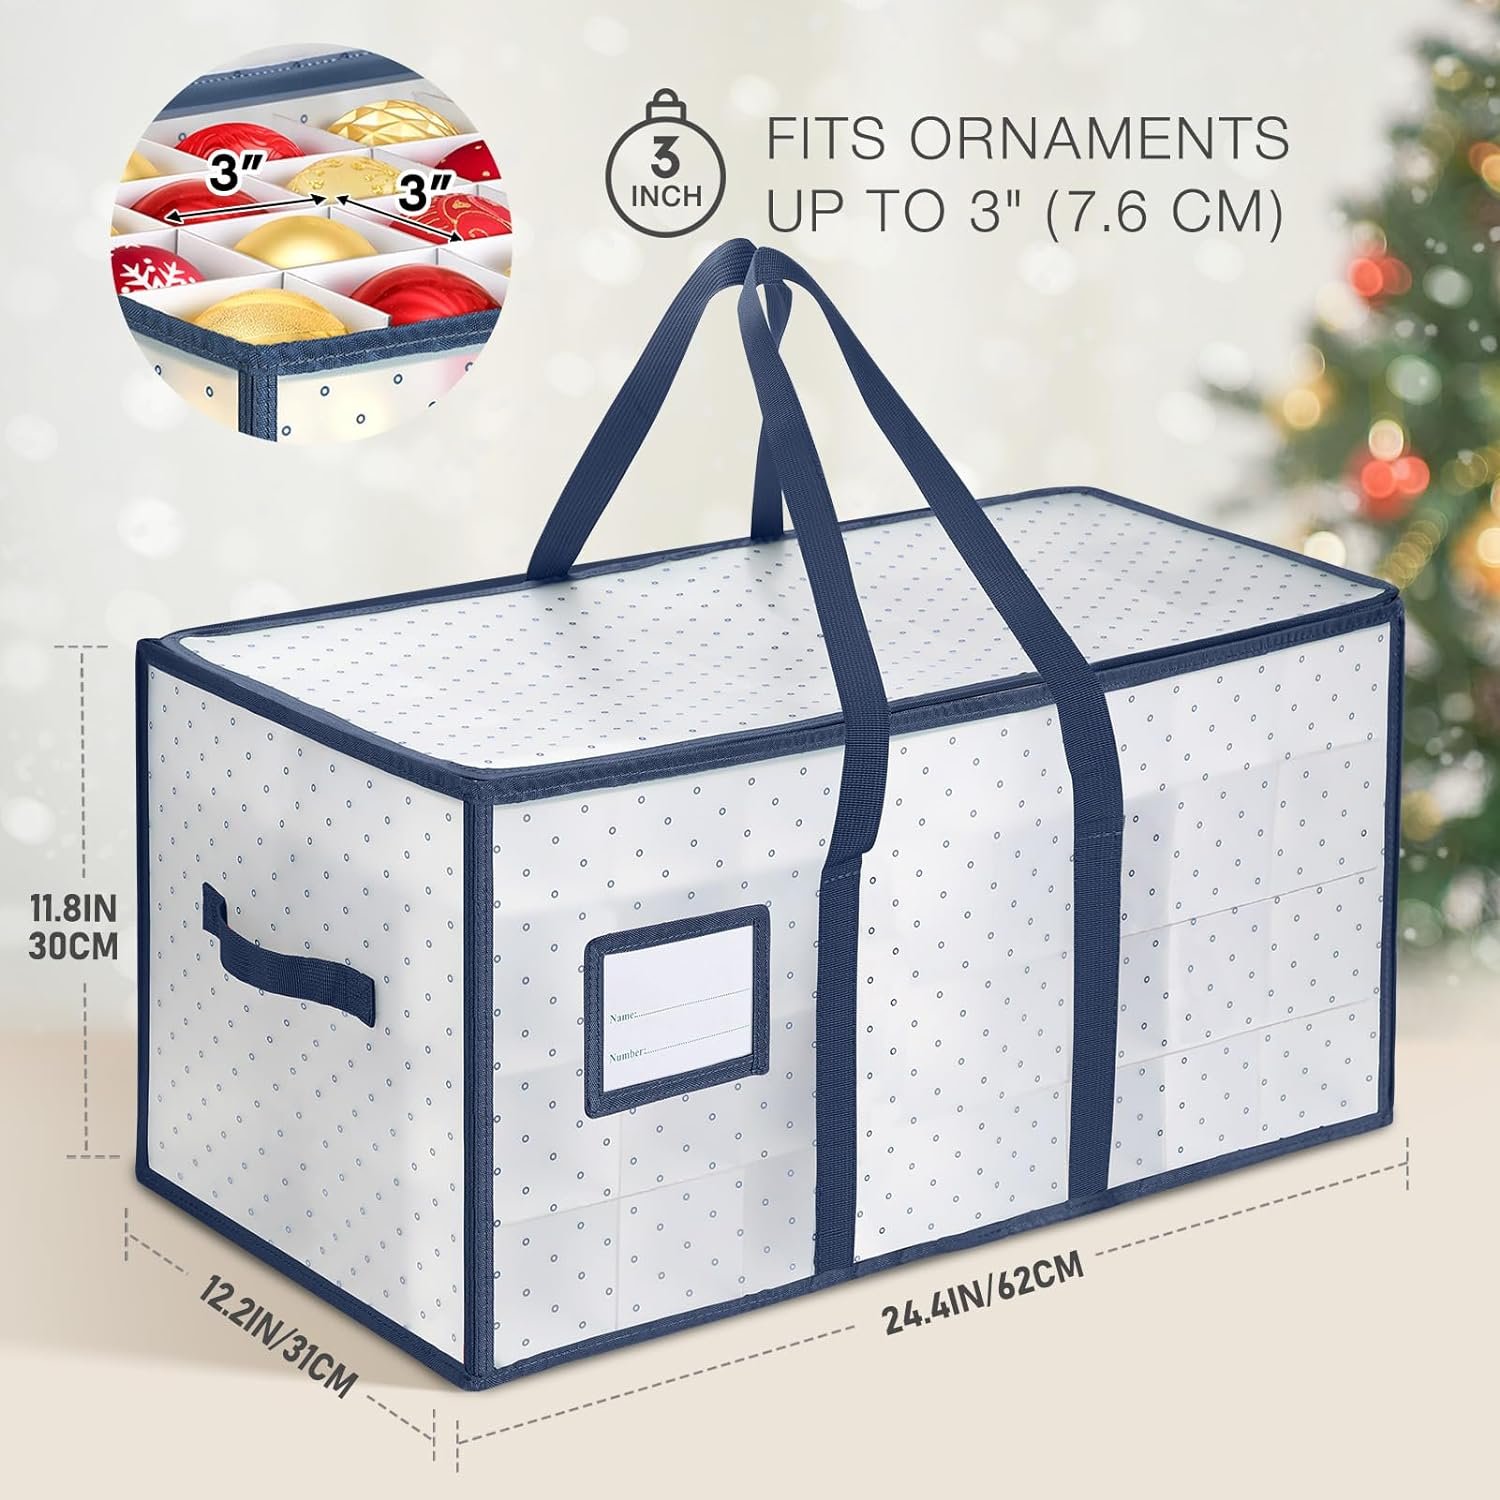 Hommtina Ornament Storage Box Review